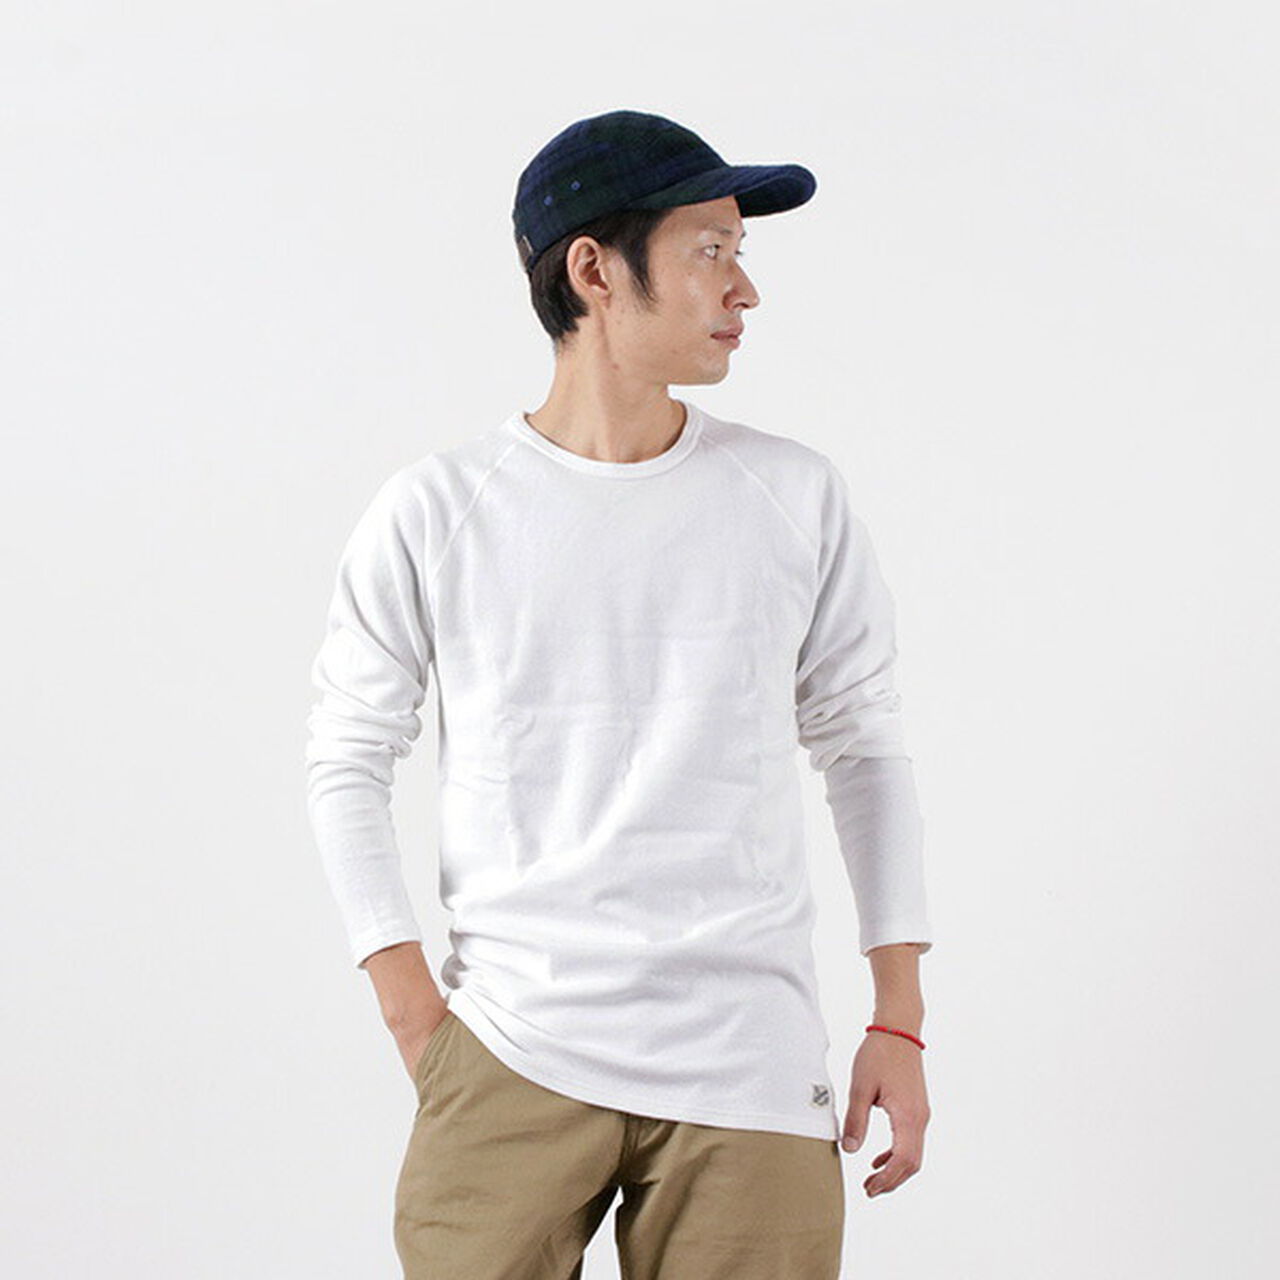 Raffy Stretch Fleece Long Sleeve T-Shirt,White, large image number 0